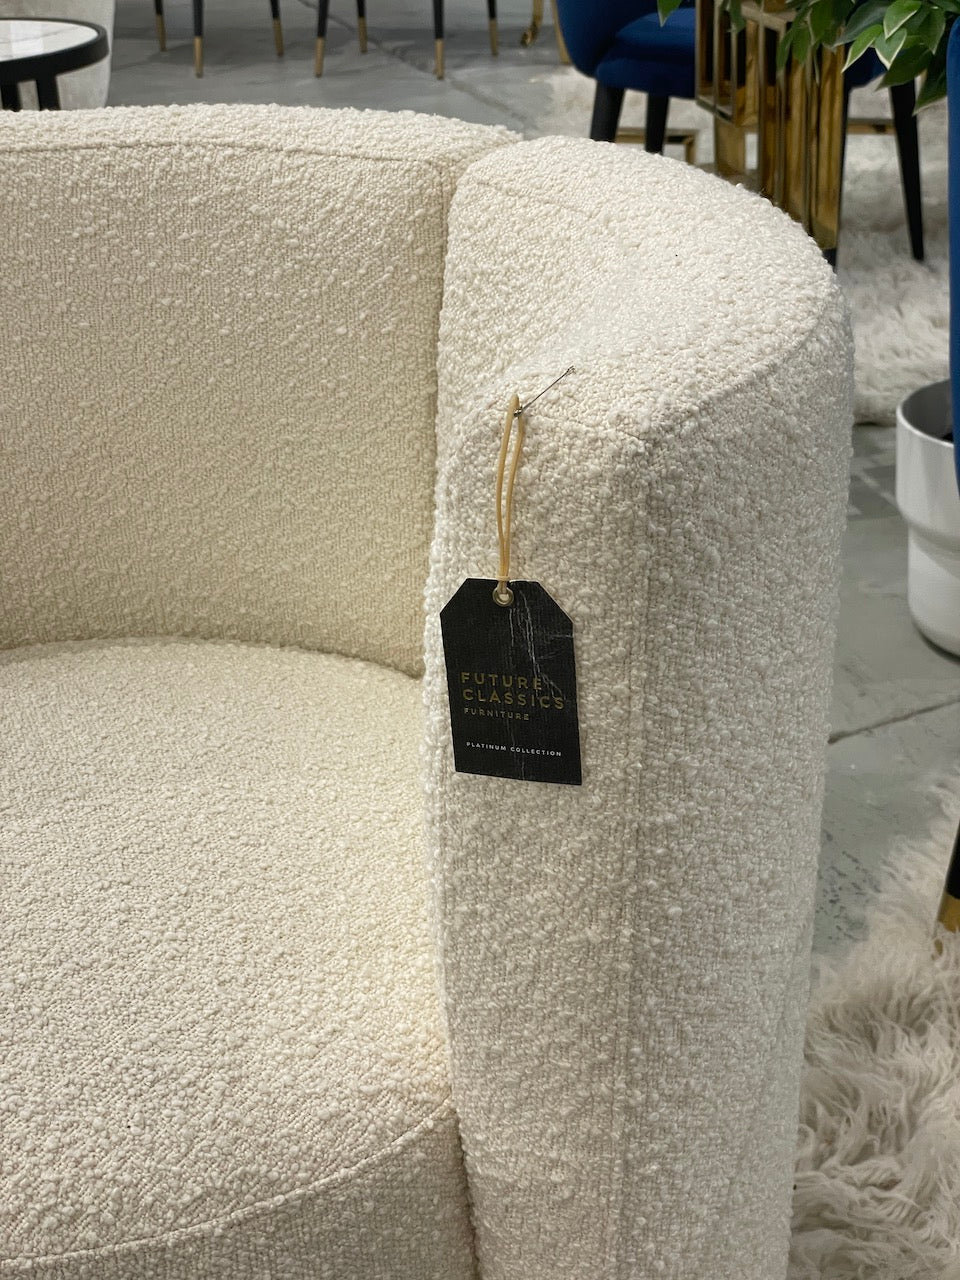 Montalcino Swivel Chair - Future Classics Furniture